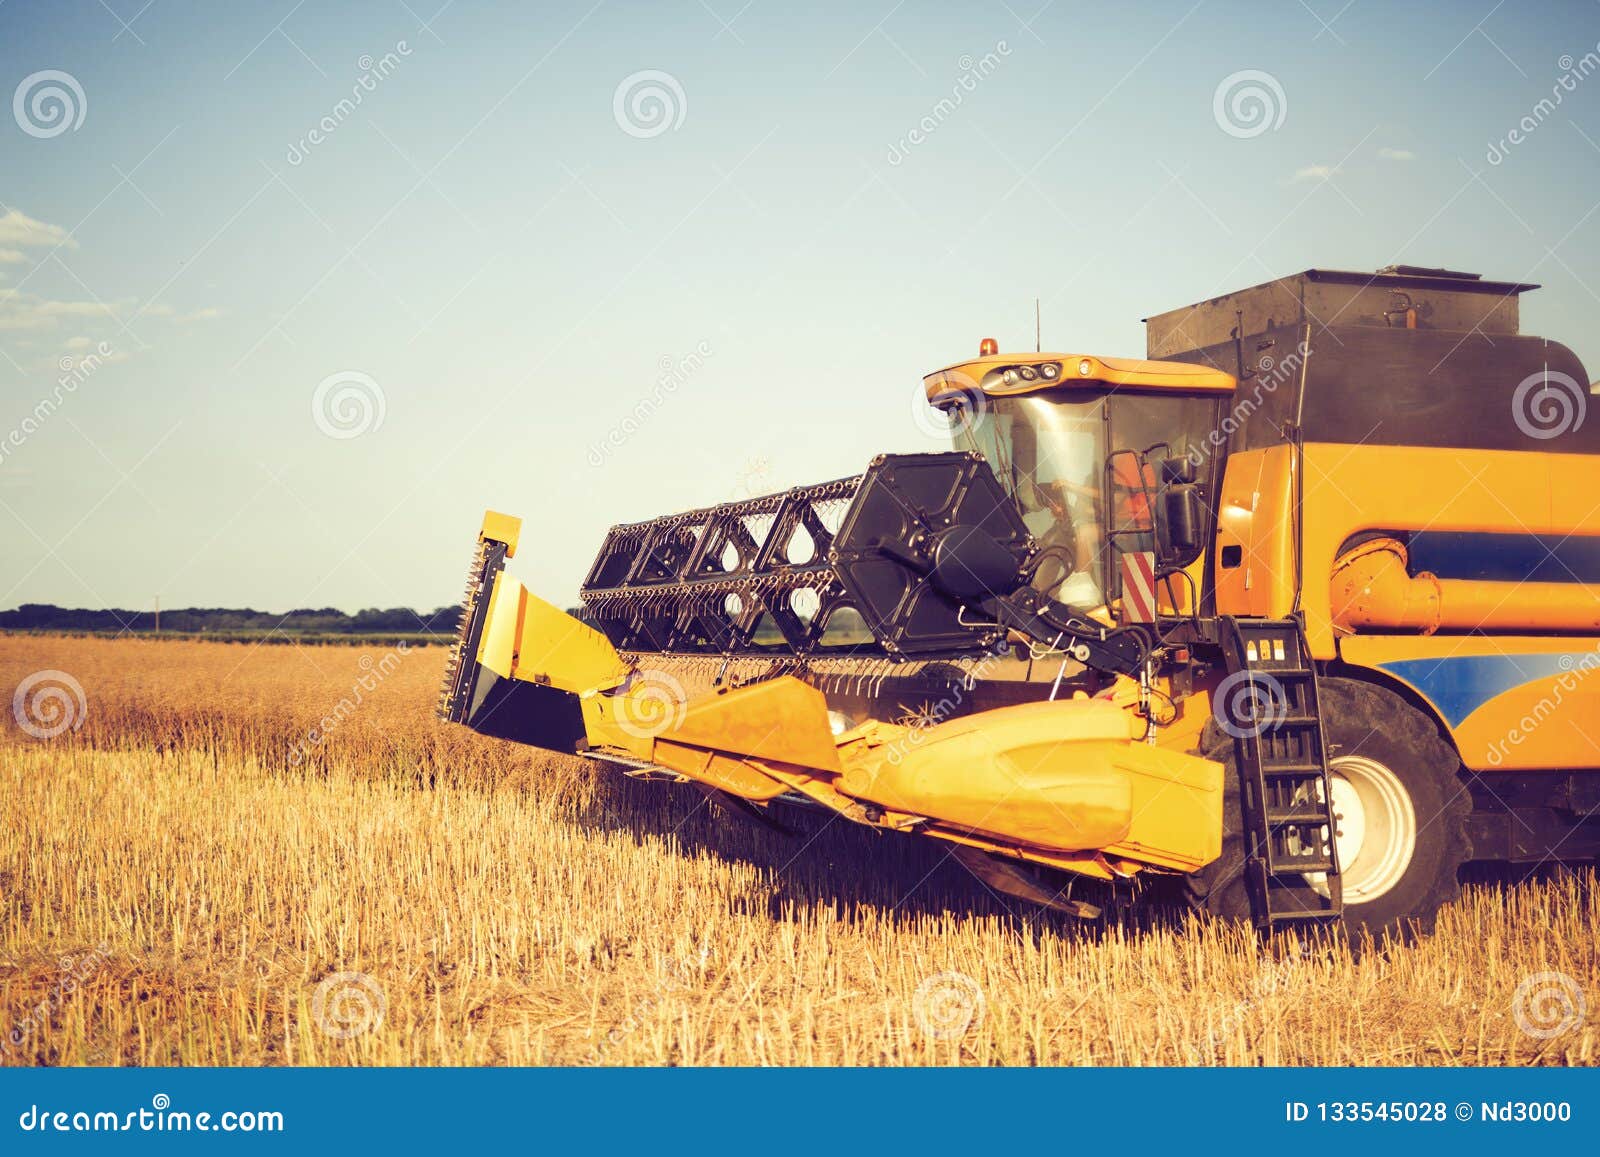 agricultura machine working in fields